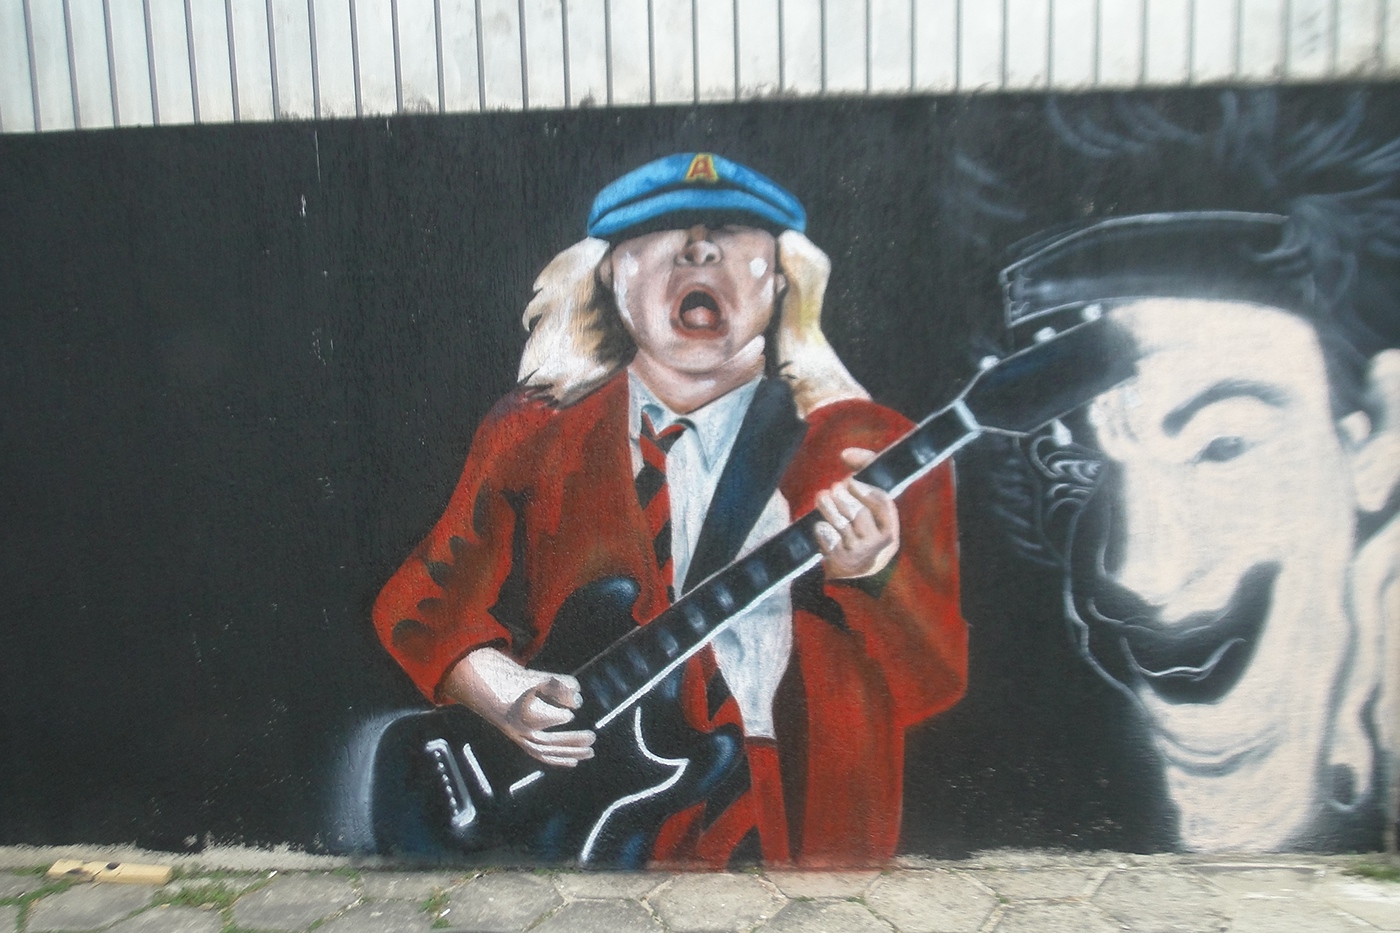 musica rock acdc rollingstones arteurbana Graffiti aerografia personagem bateria saxofone